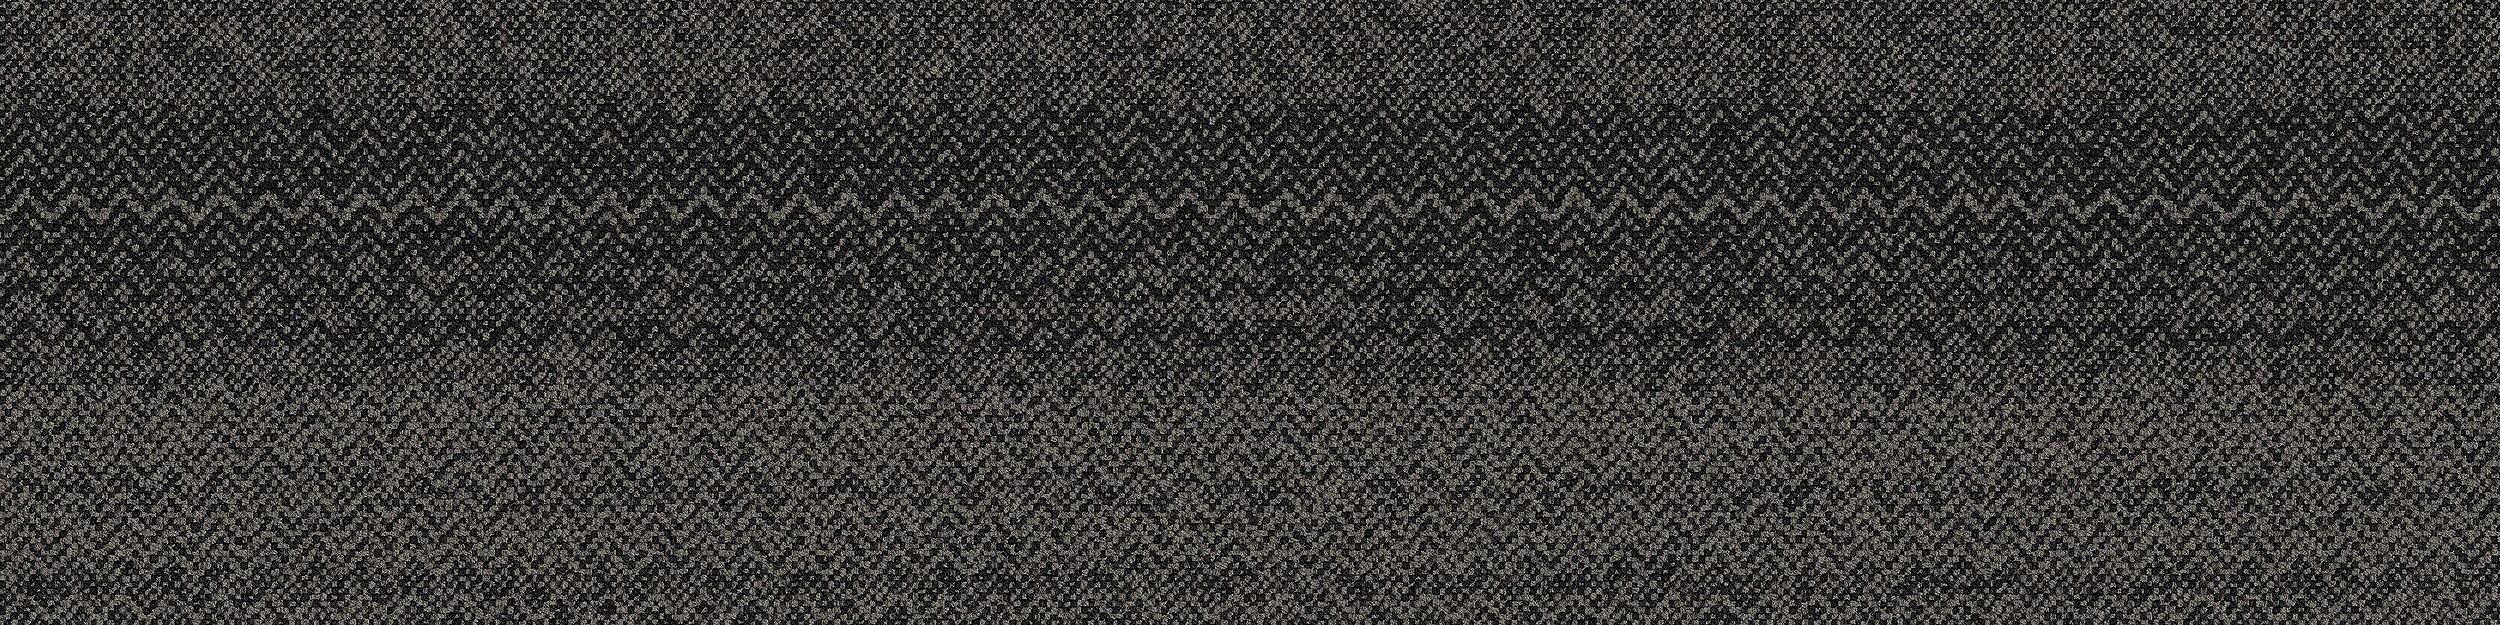 Stitchery Carpet Tile In Iron Stitchery image number 6